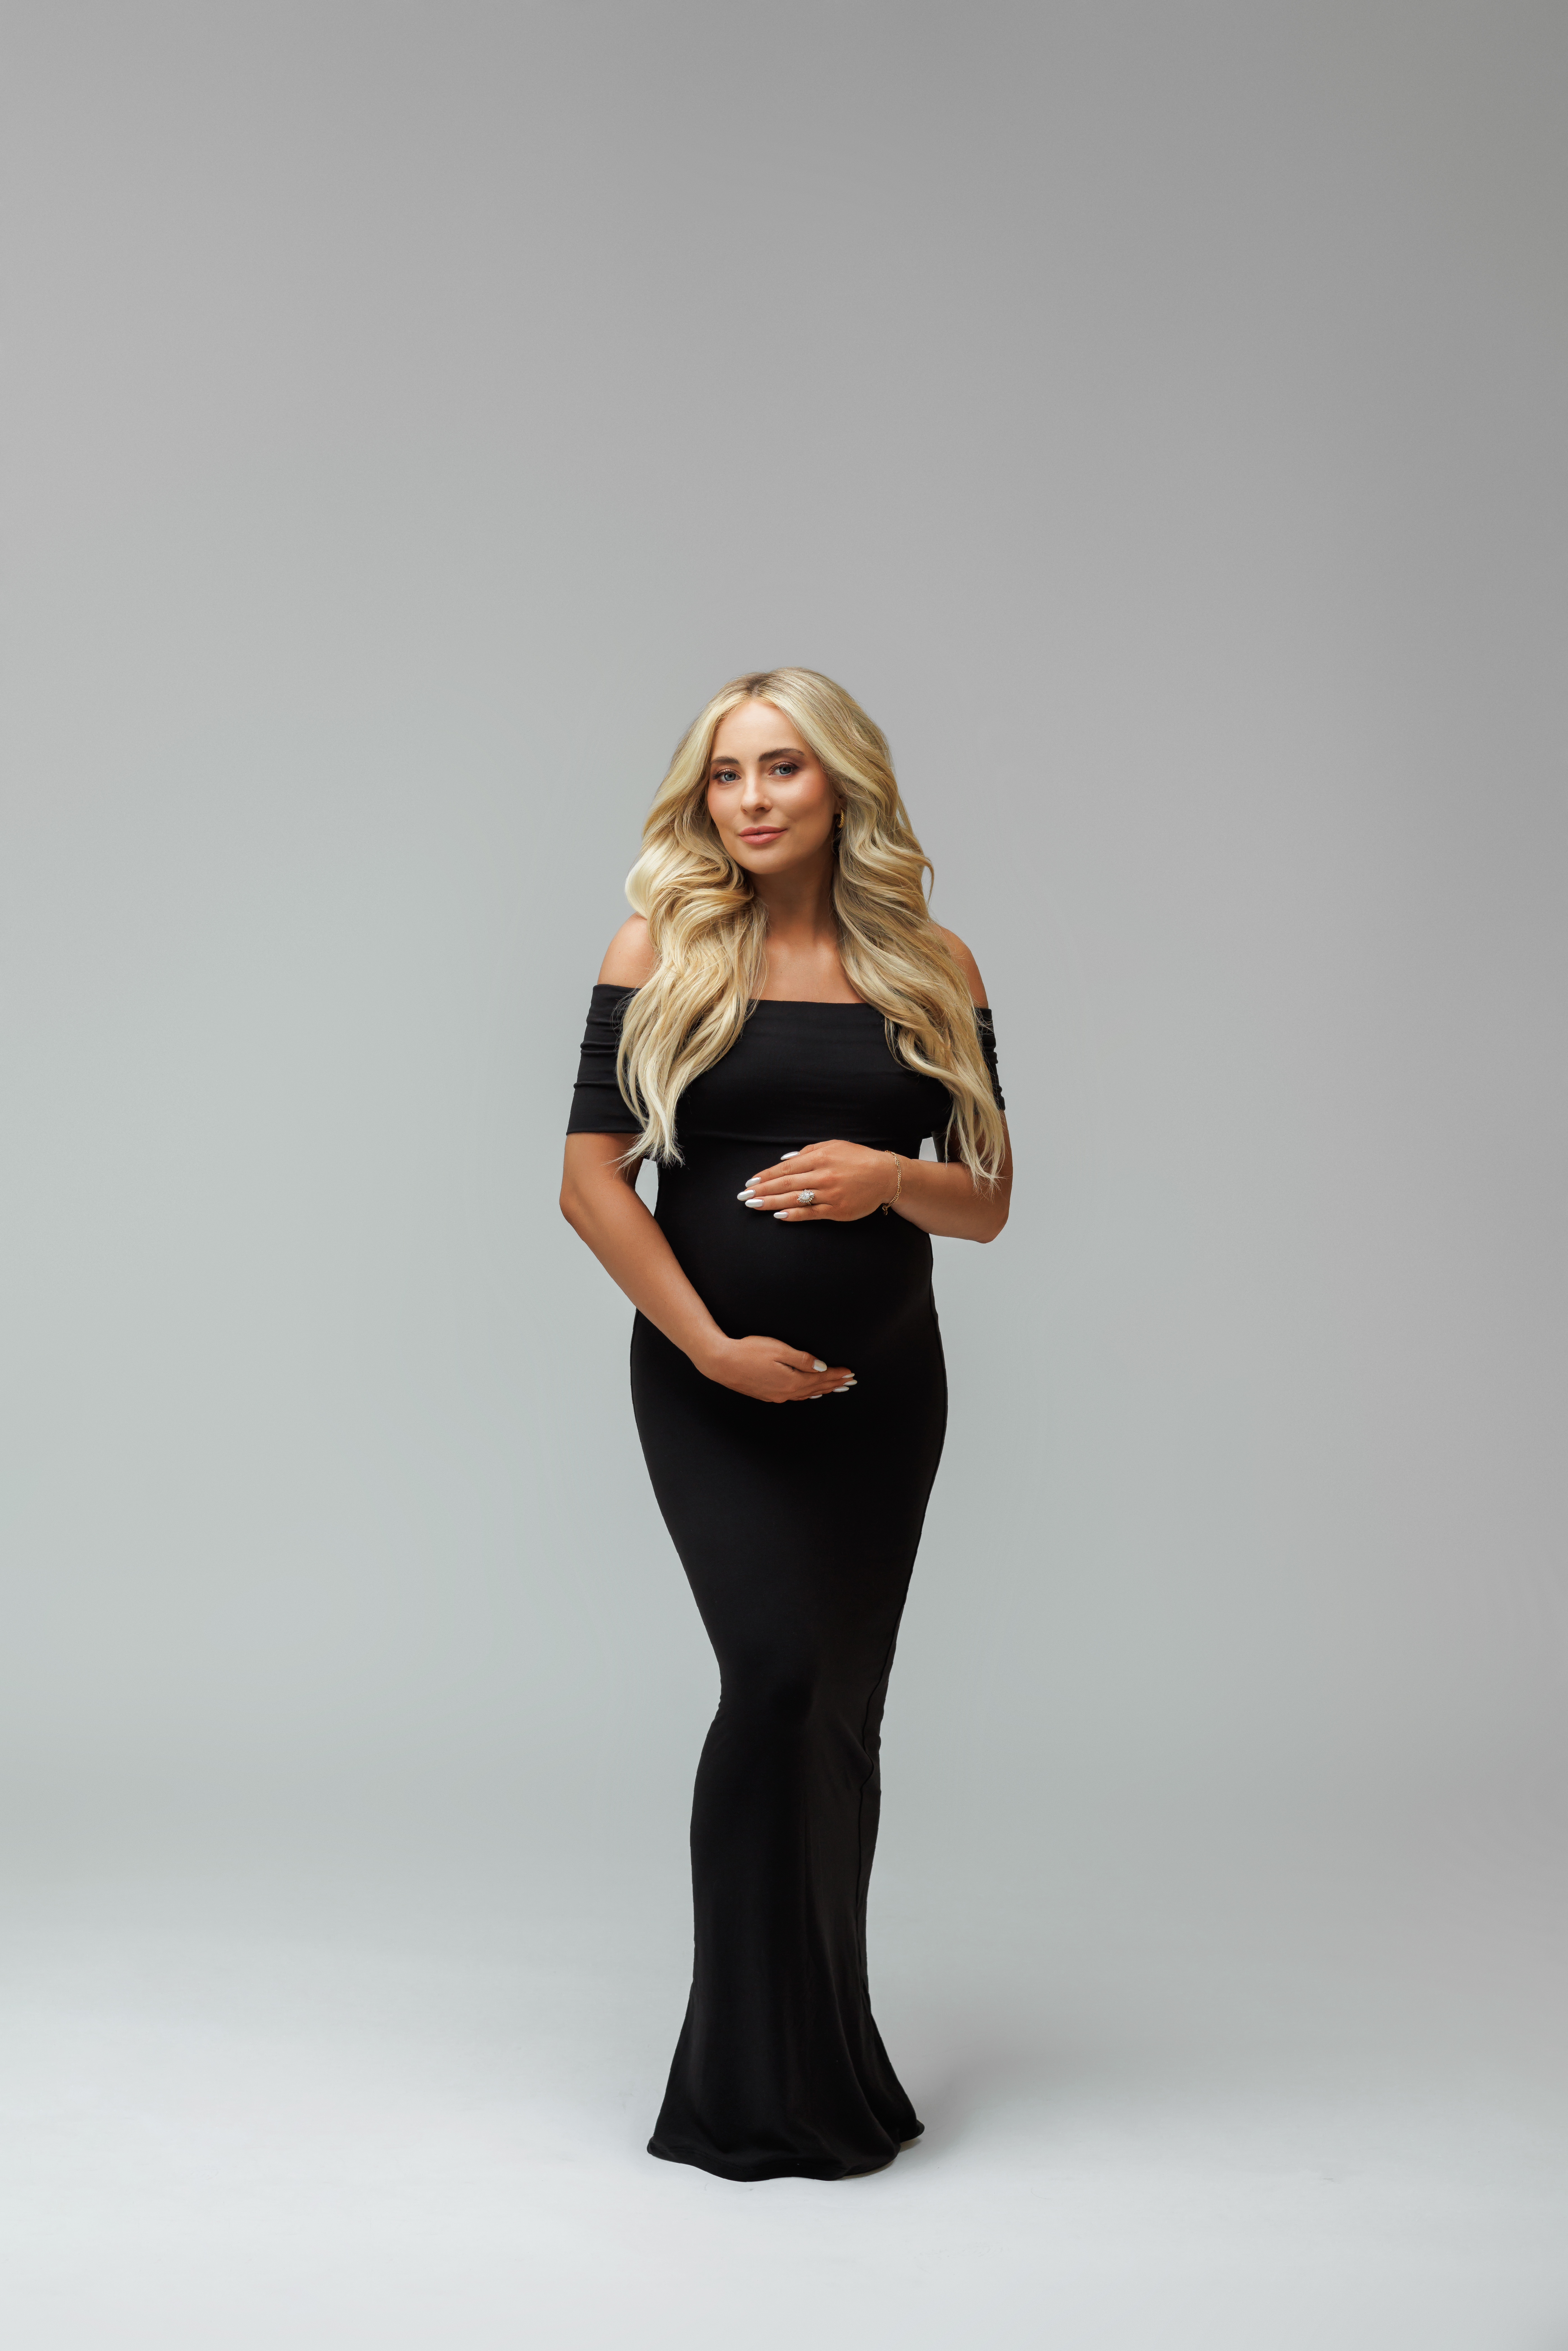 Mykayla Skinner maternity photoshoot with Beka Price Photography